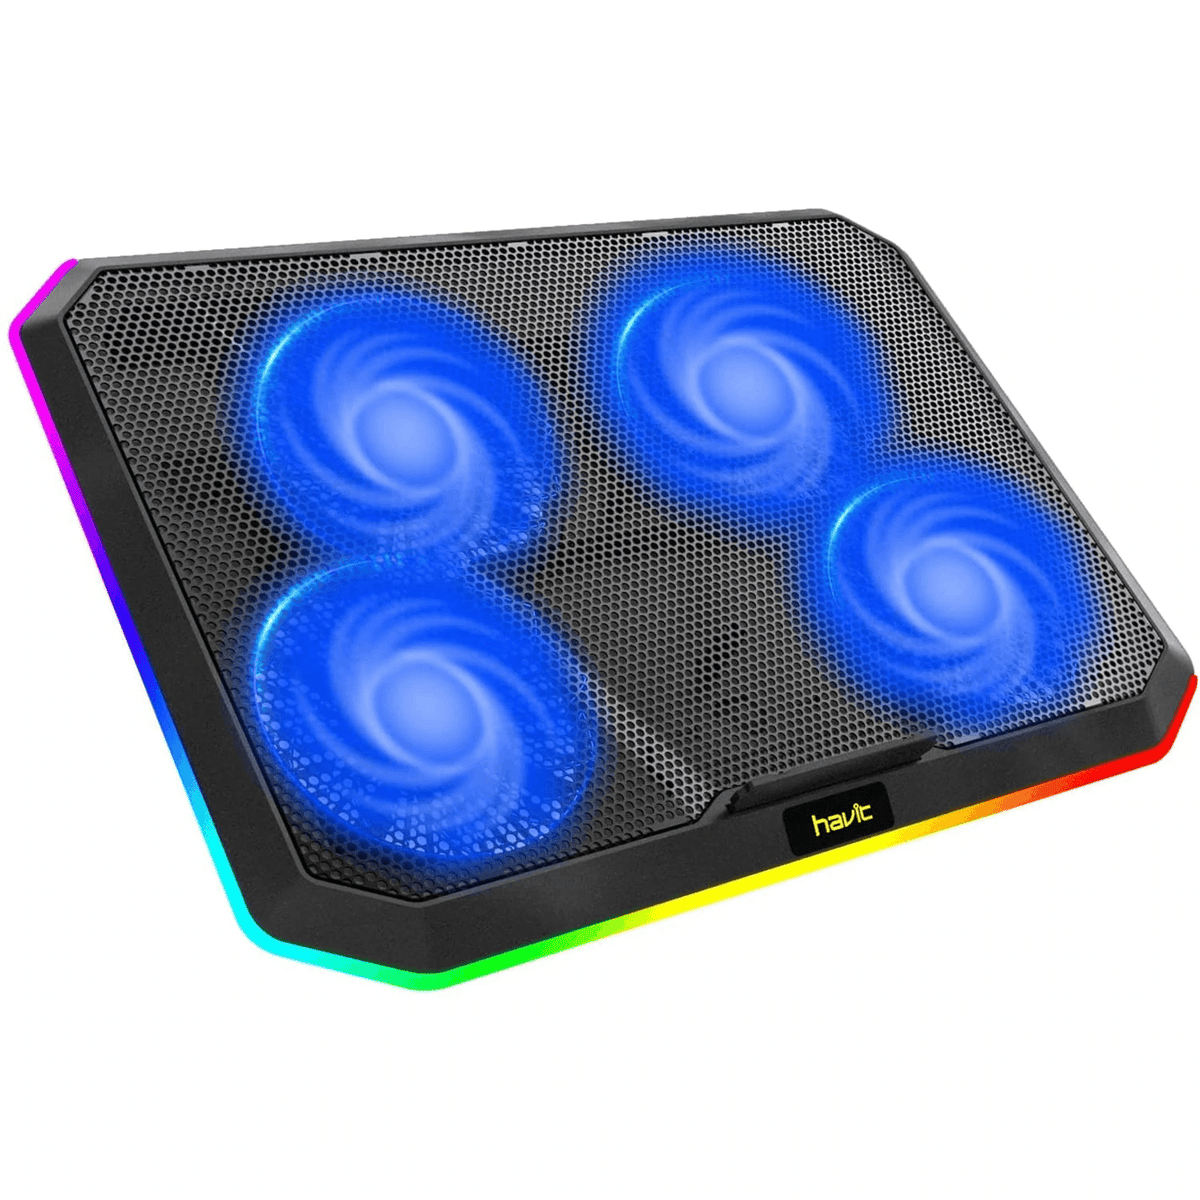 Soporte Havit Cooling Pad F2076 para Notebook | USB | Luces RGB | Color Negro